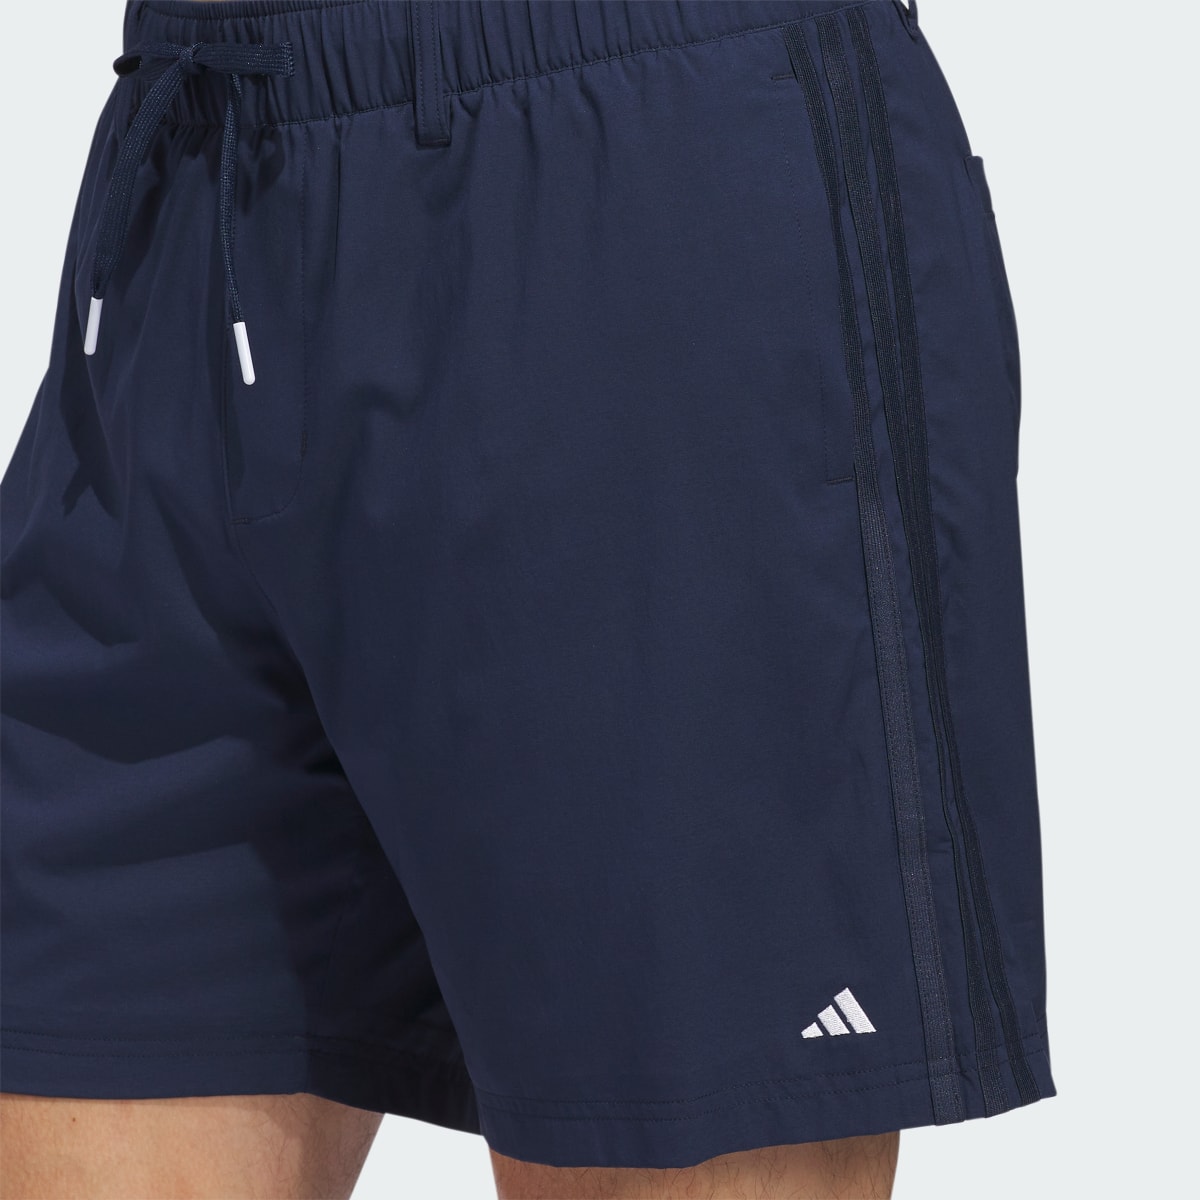 Adidas Ultimate365 Shorts. 5